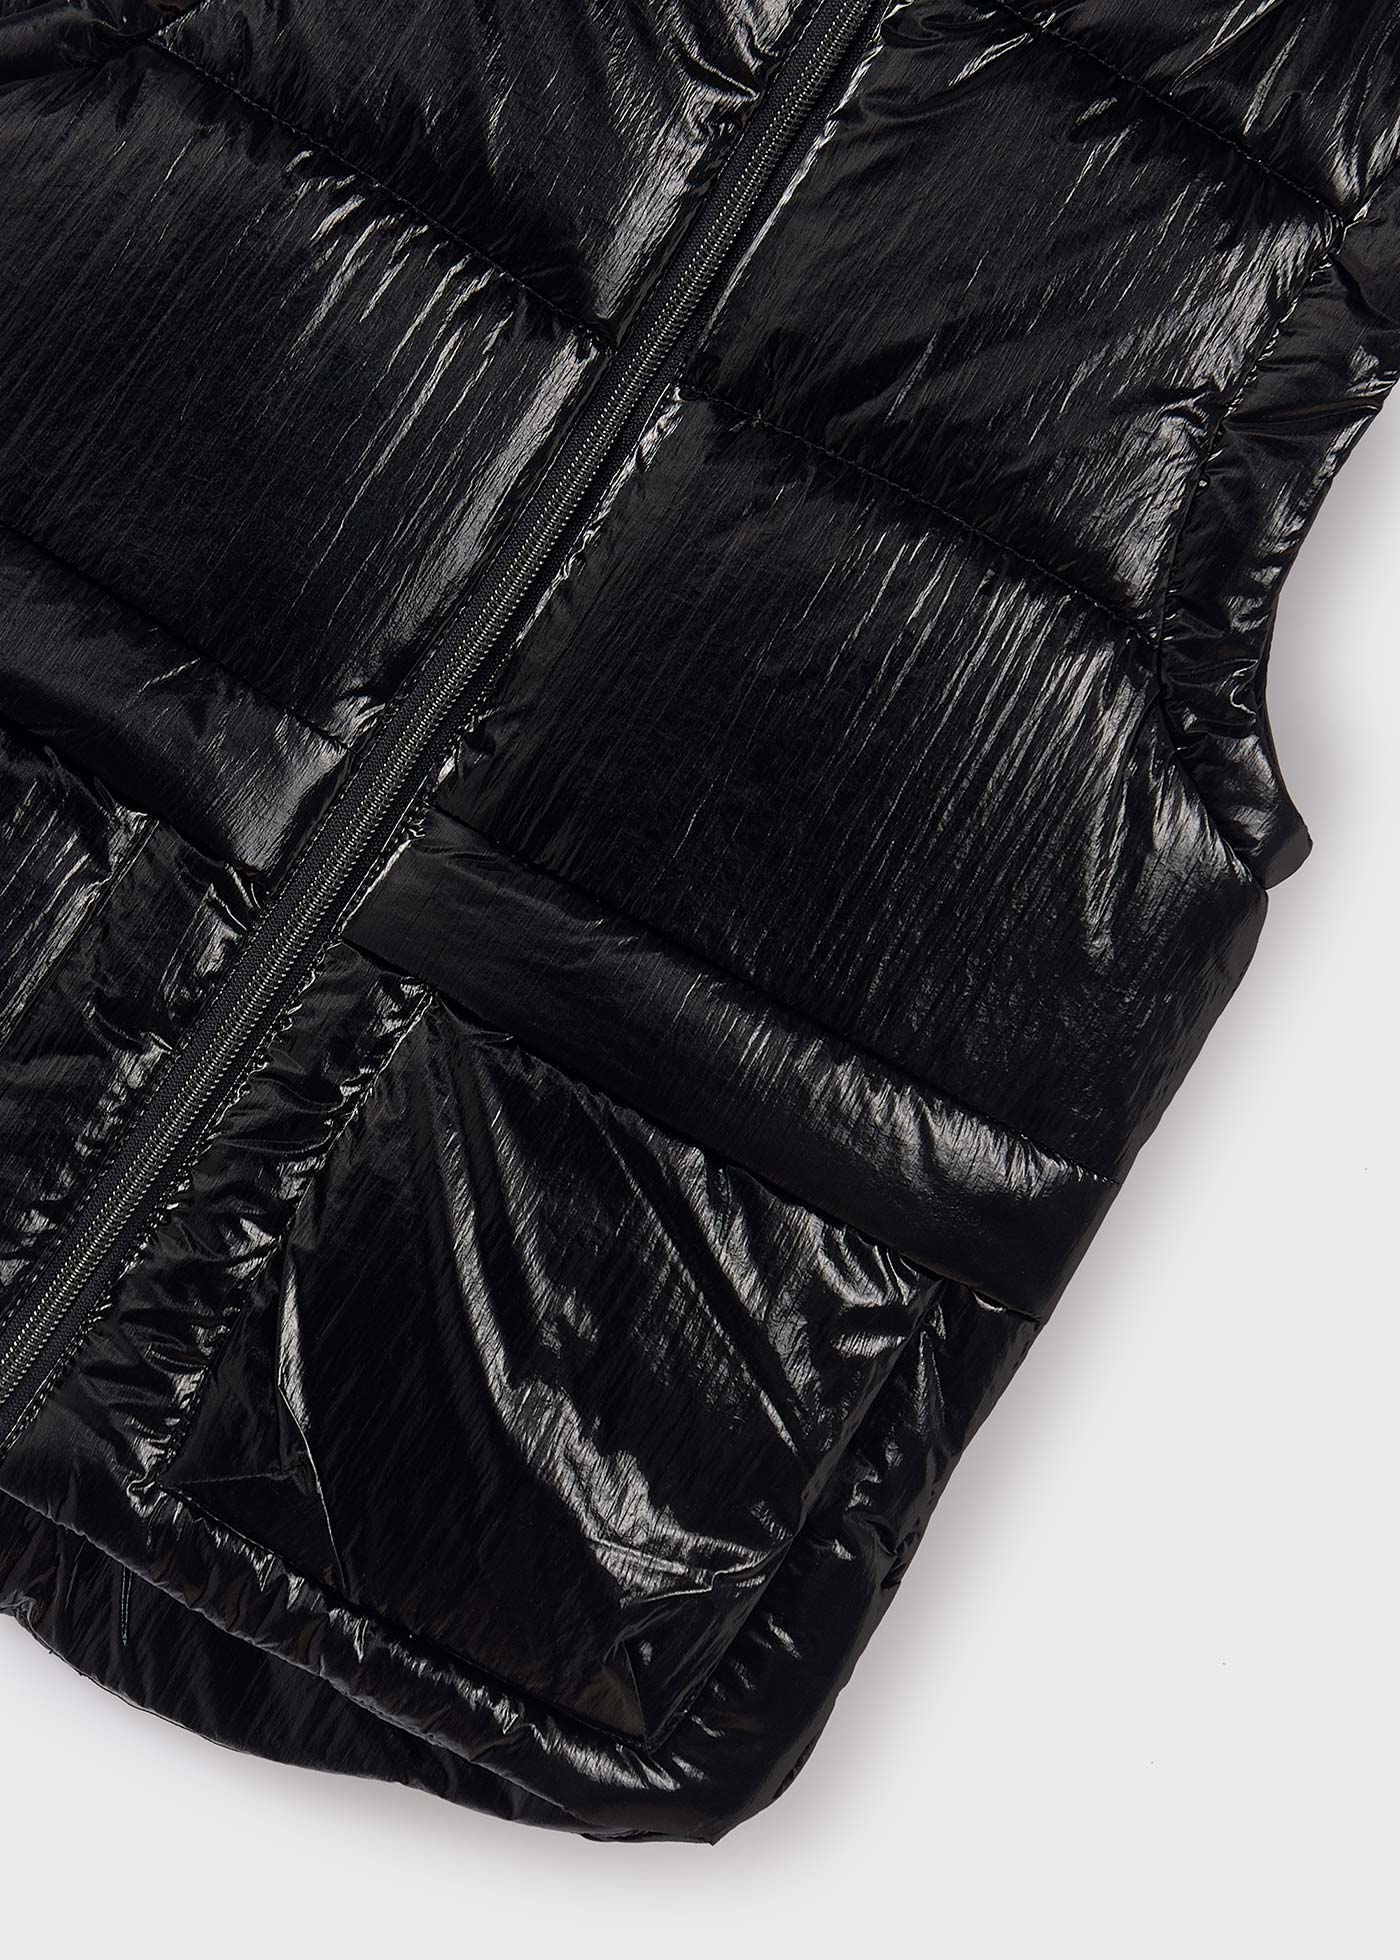 Metallic vest recycled fibers girl